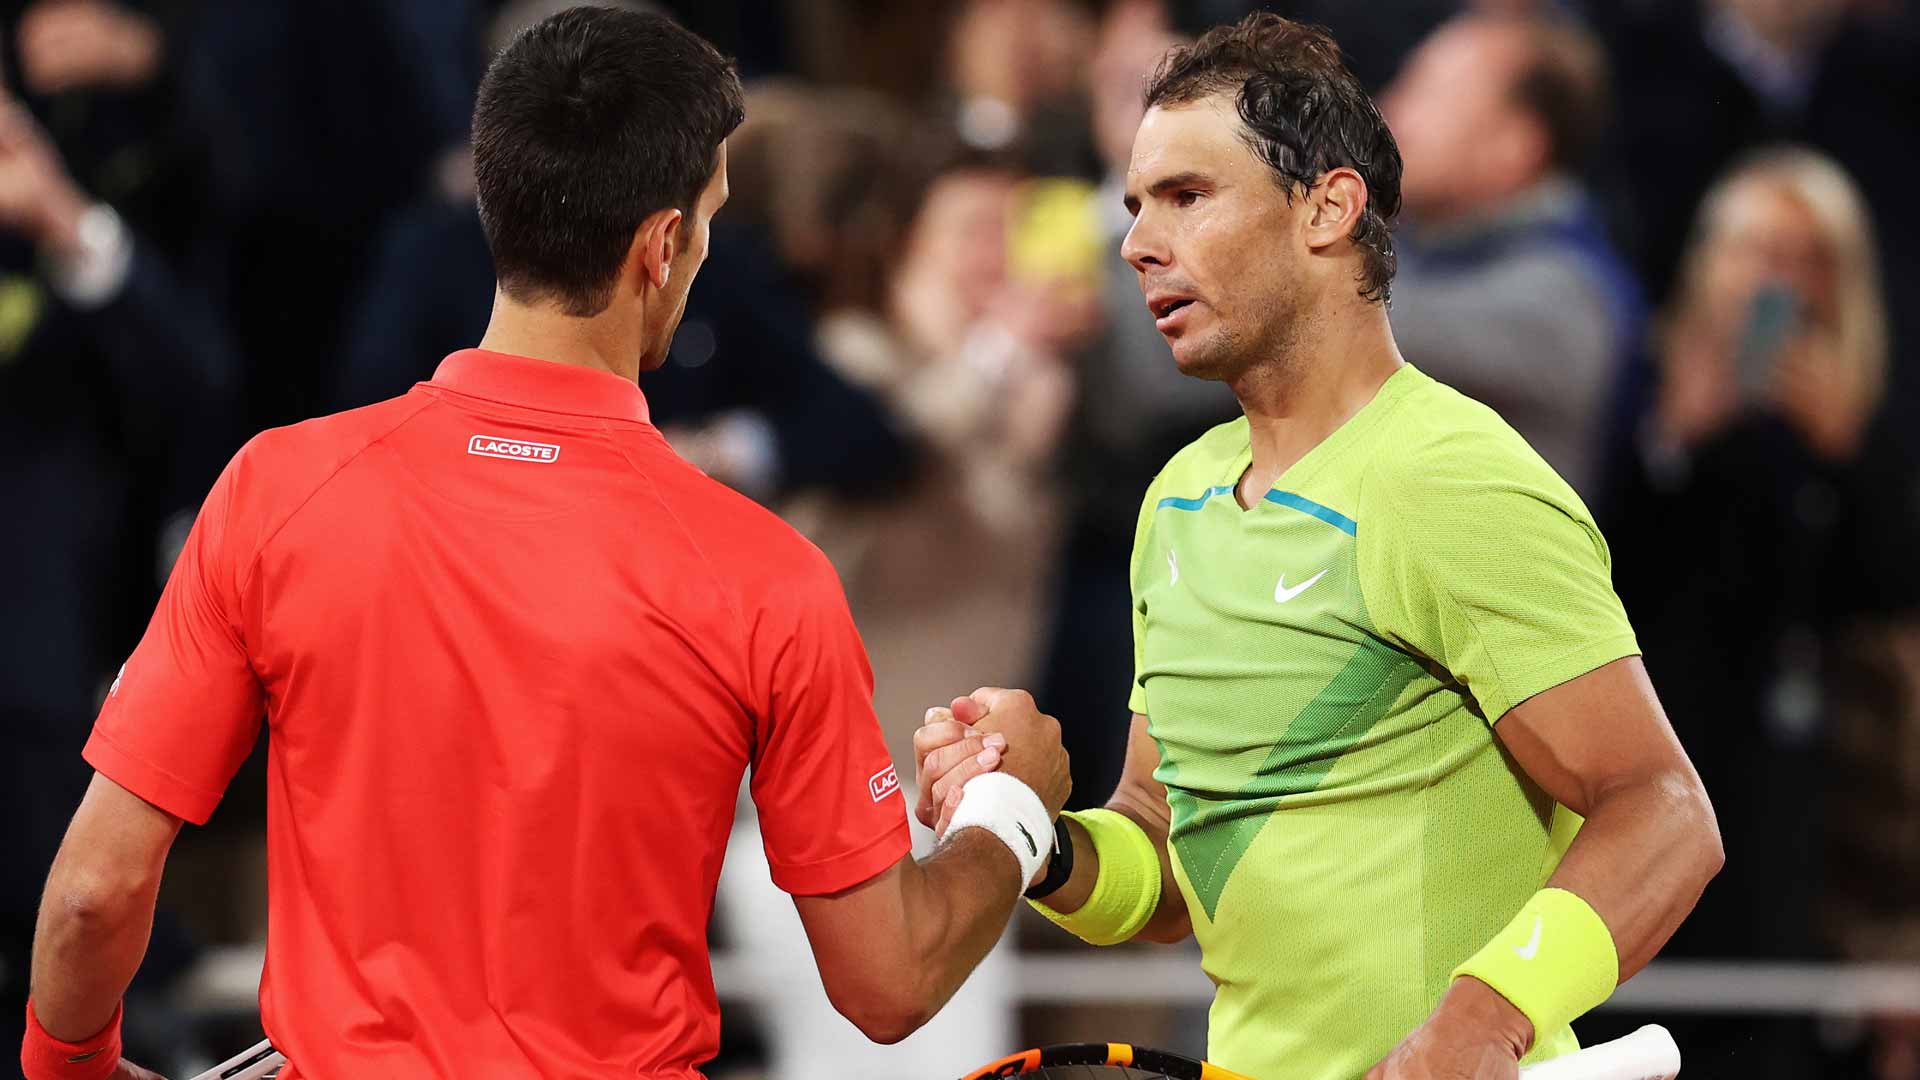 Novak Djokovic and Rafael Nadal have combined to win 55 major titles.